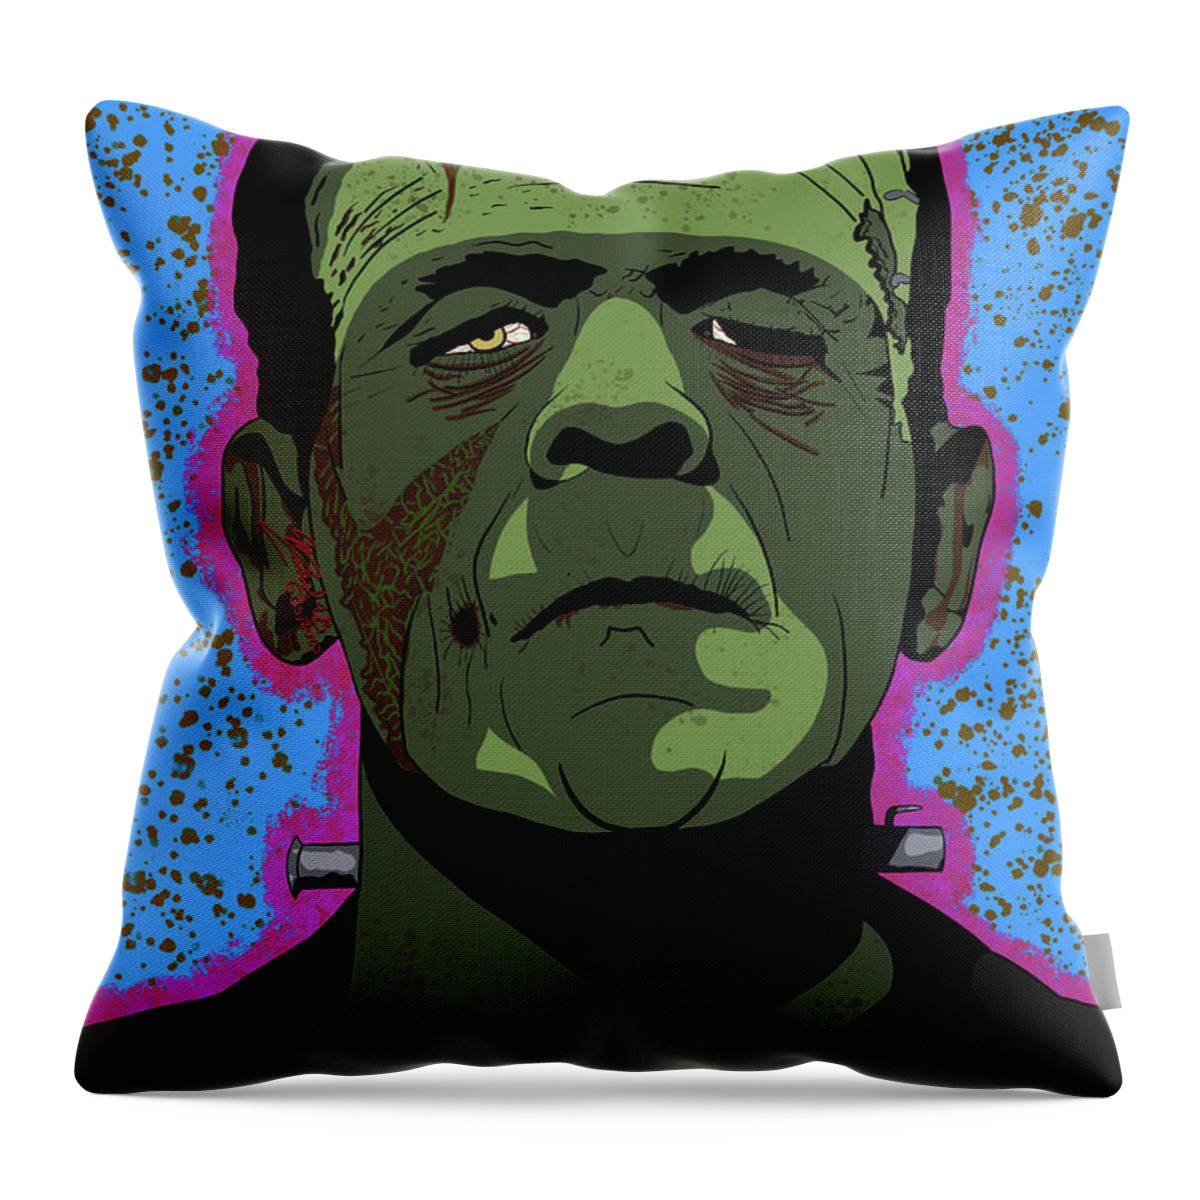 Boris Karloff Throw Pillow featuring the digital art Boris Karloff Frankenstein's monster by Marisol VB